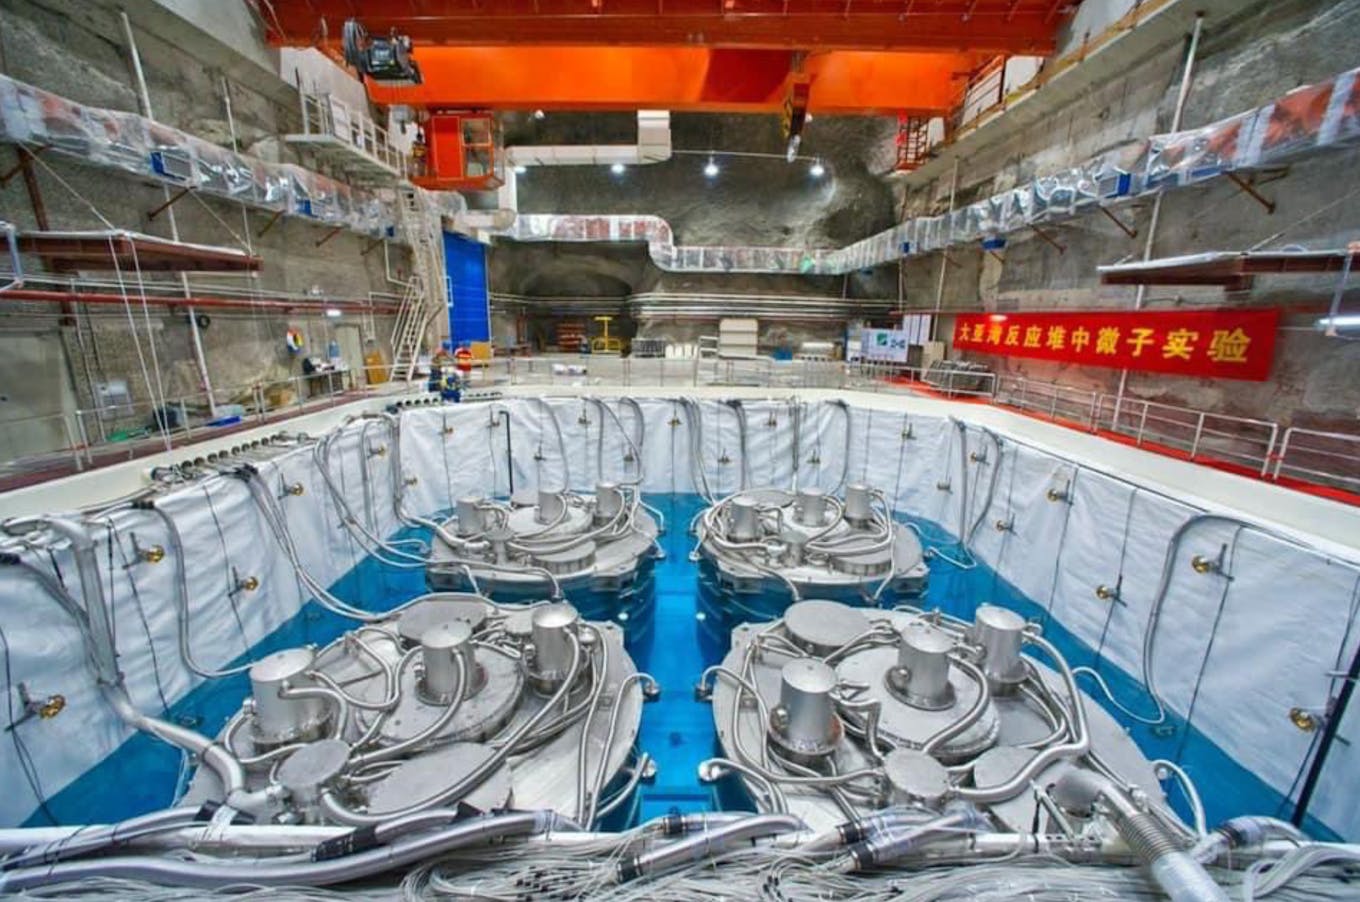 Detectors_Daya Bay Nuclear Power Station_China_Shenzhen